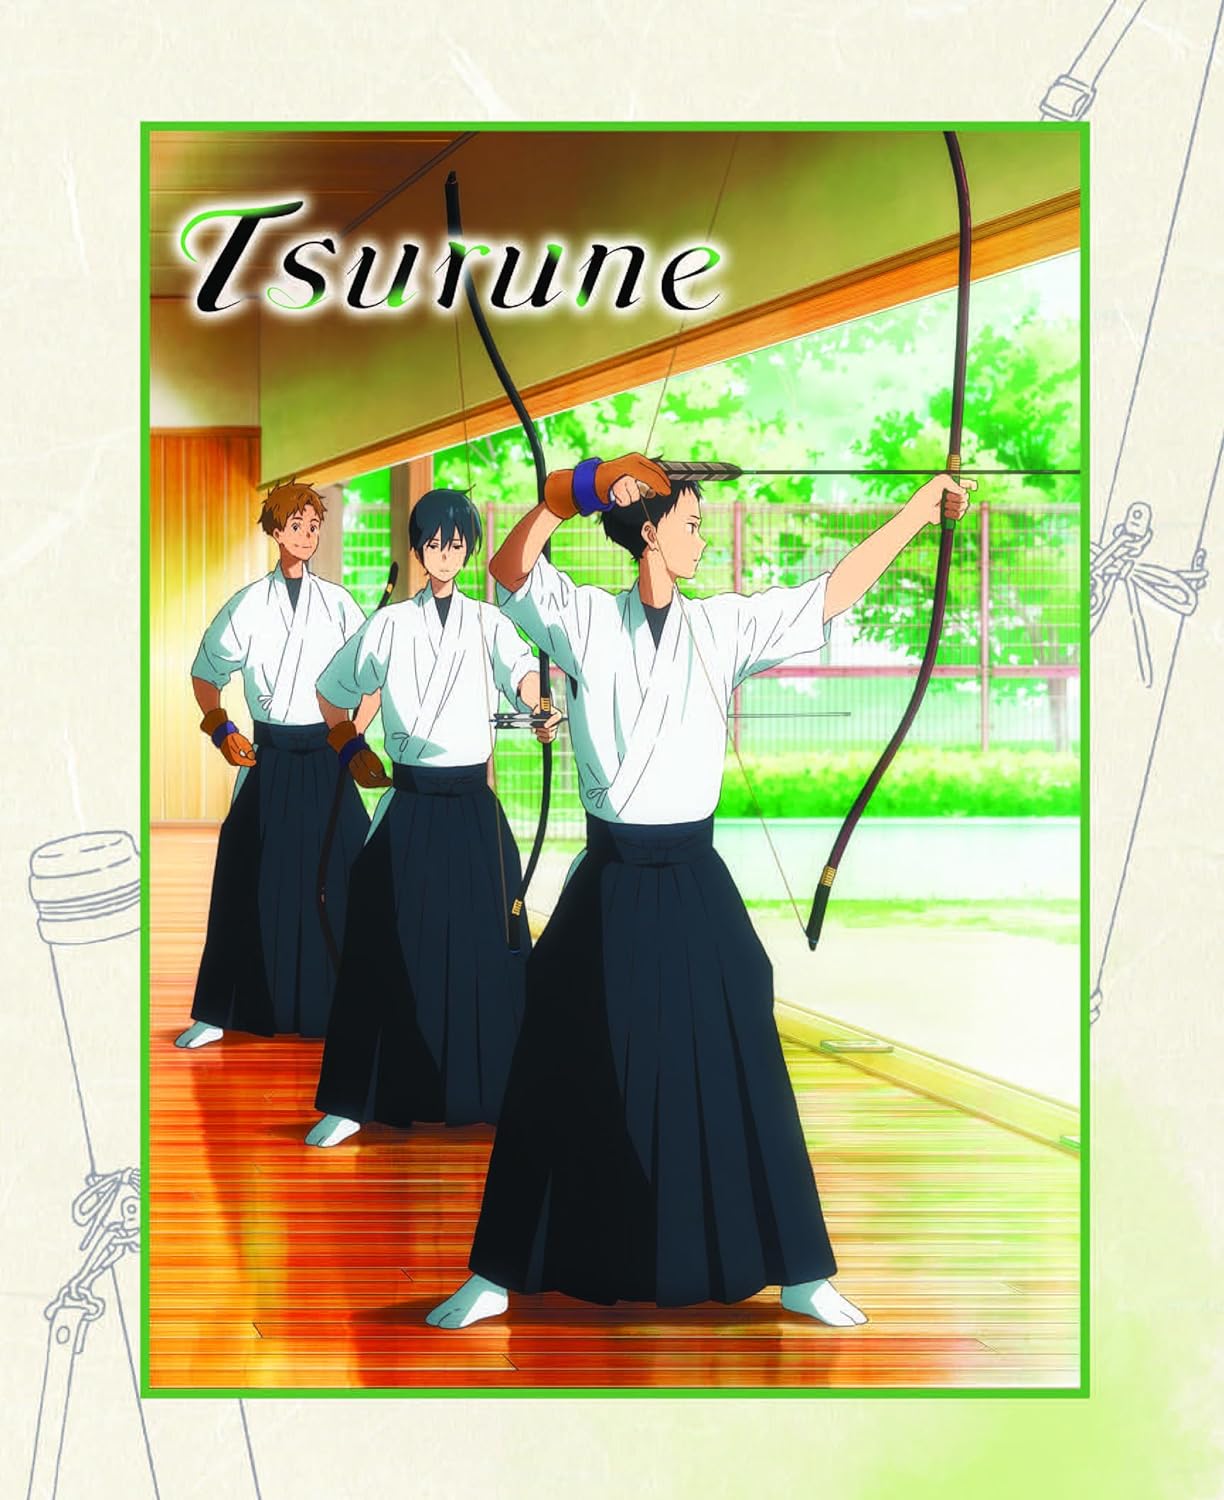 KyoAni Archery Anime Tsurune Takes Aim at the Big Screen!, Anime News